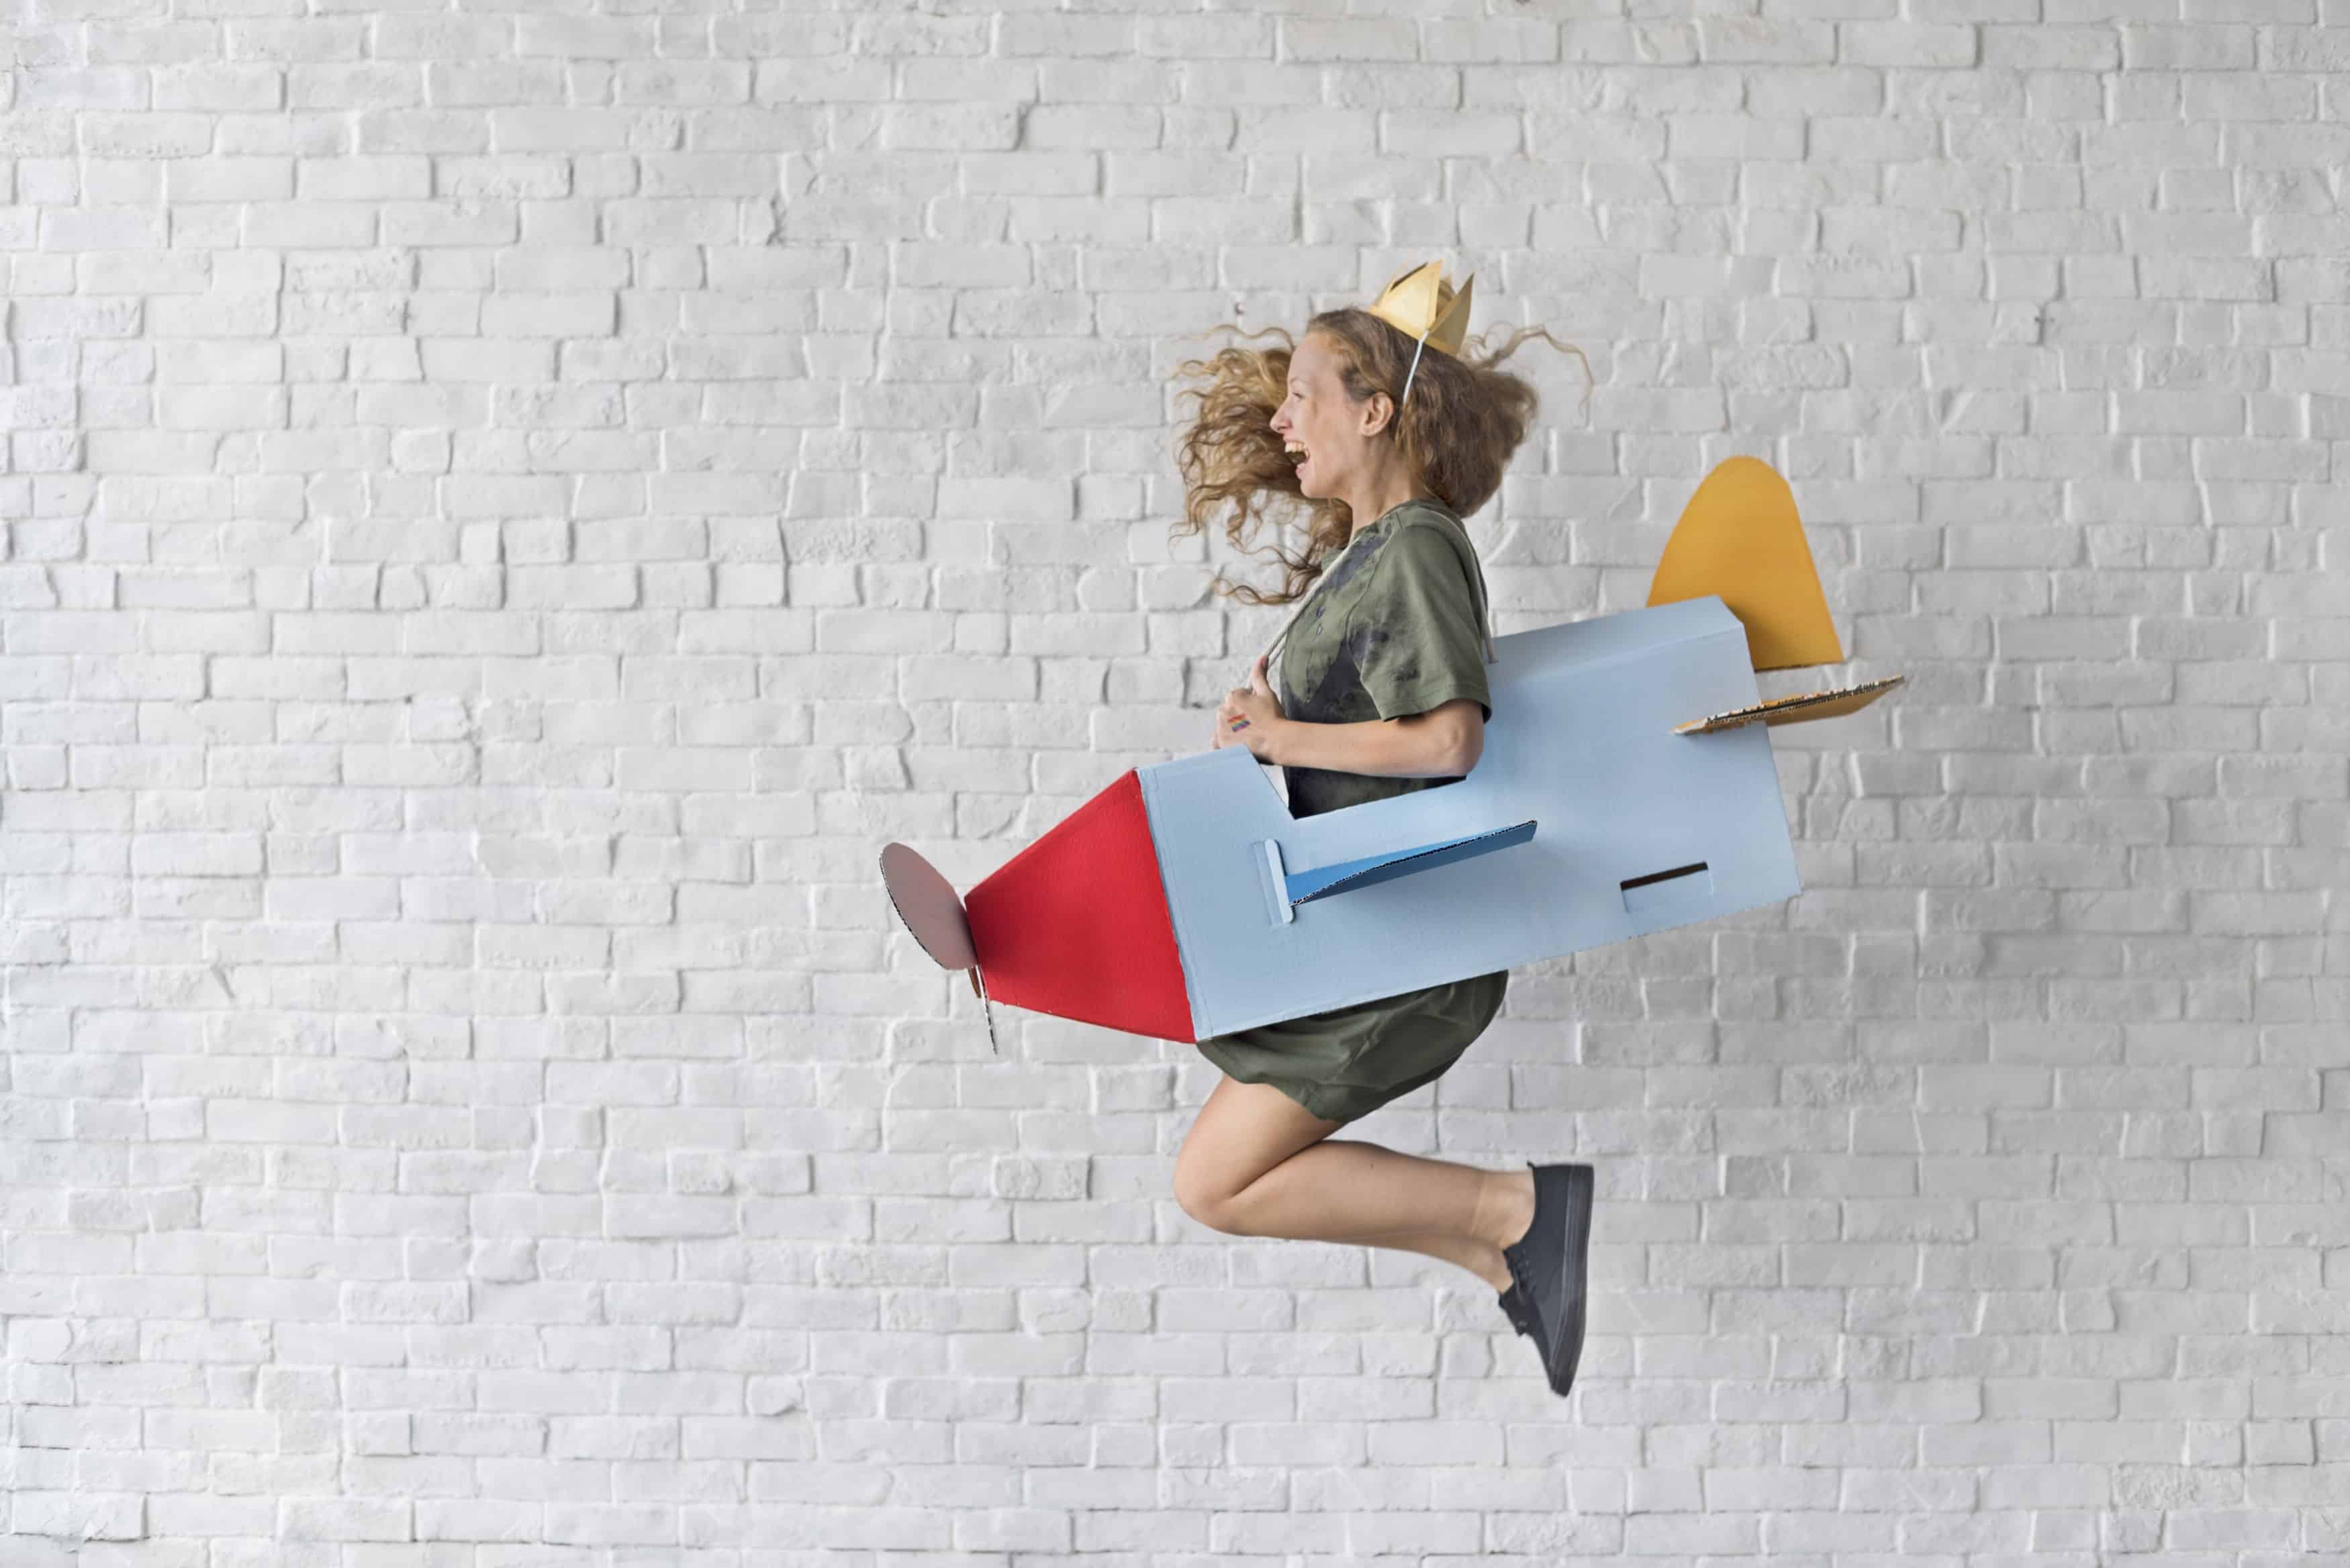 Girl flying in a little plane